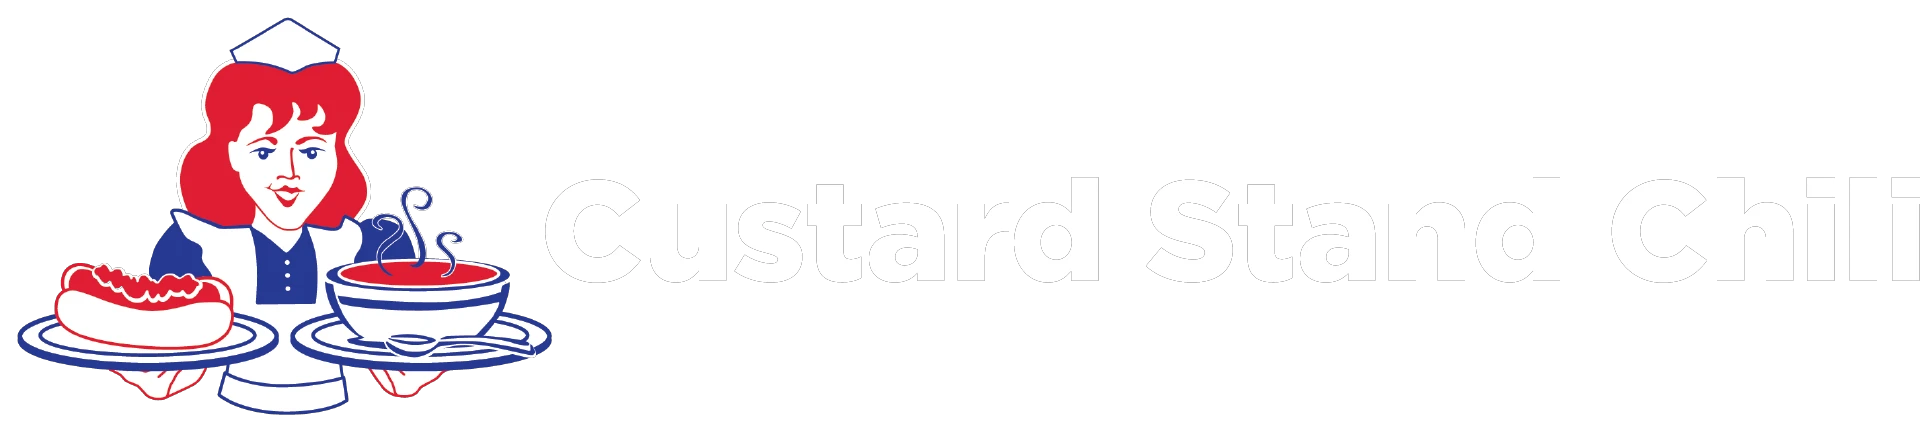 Custardstand.com